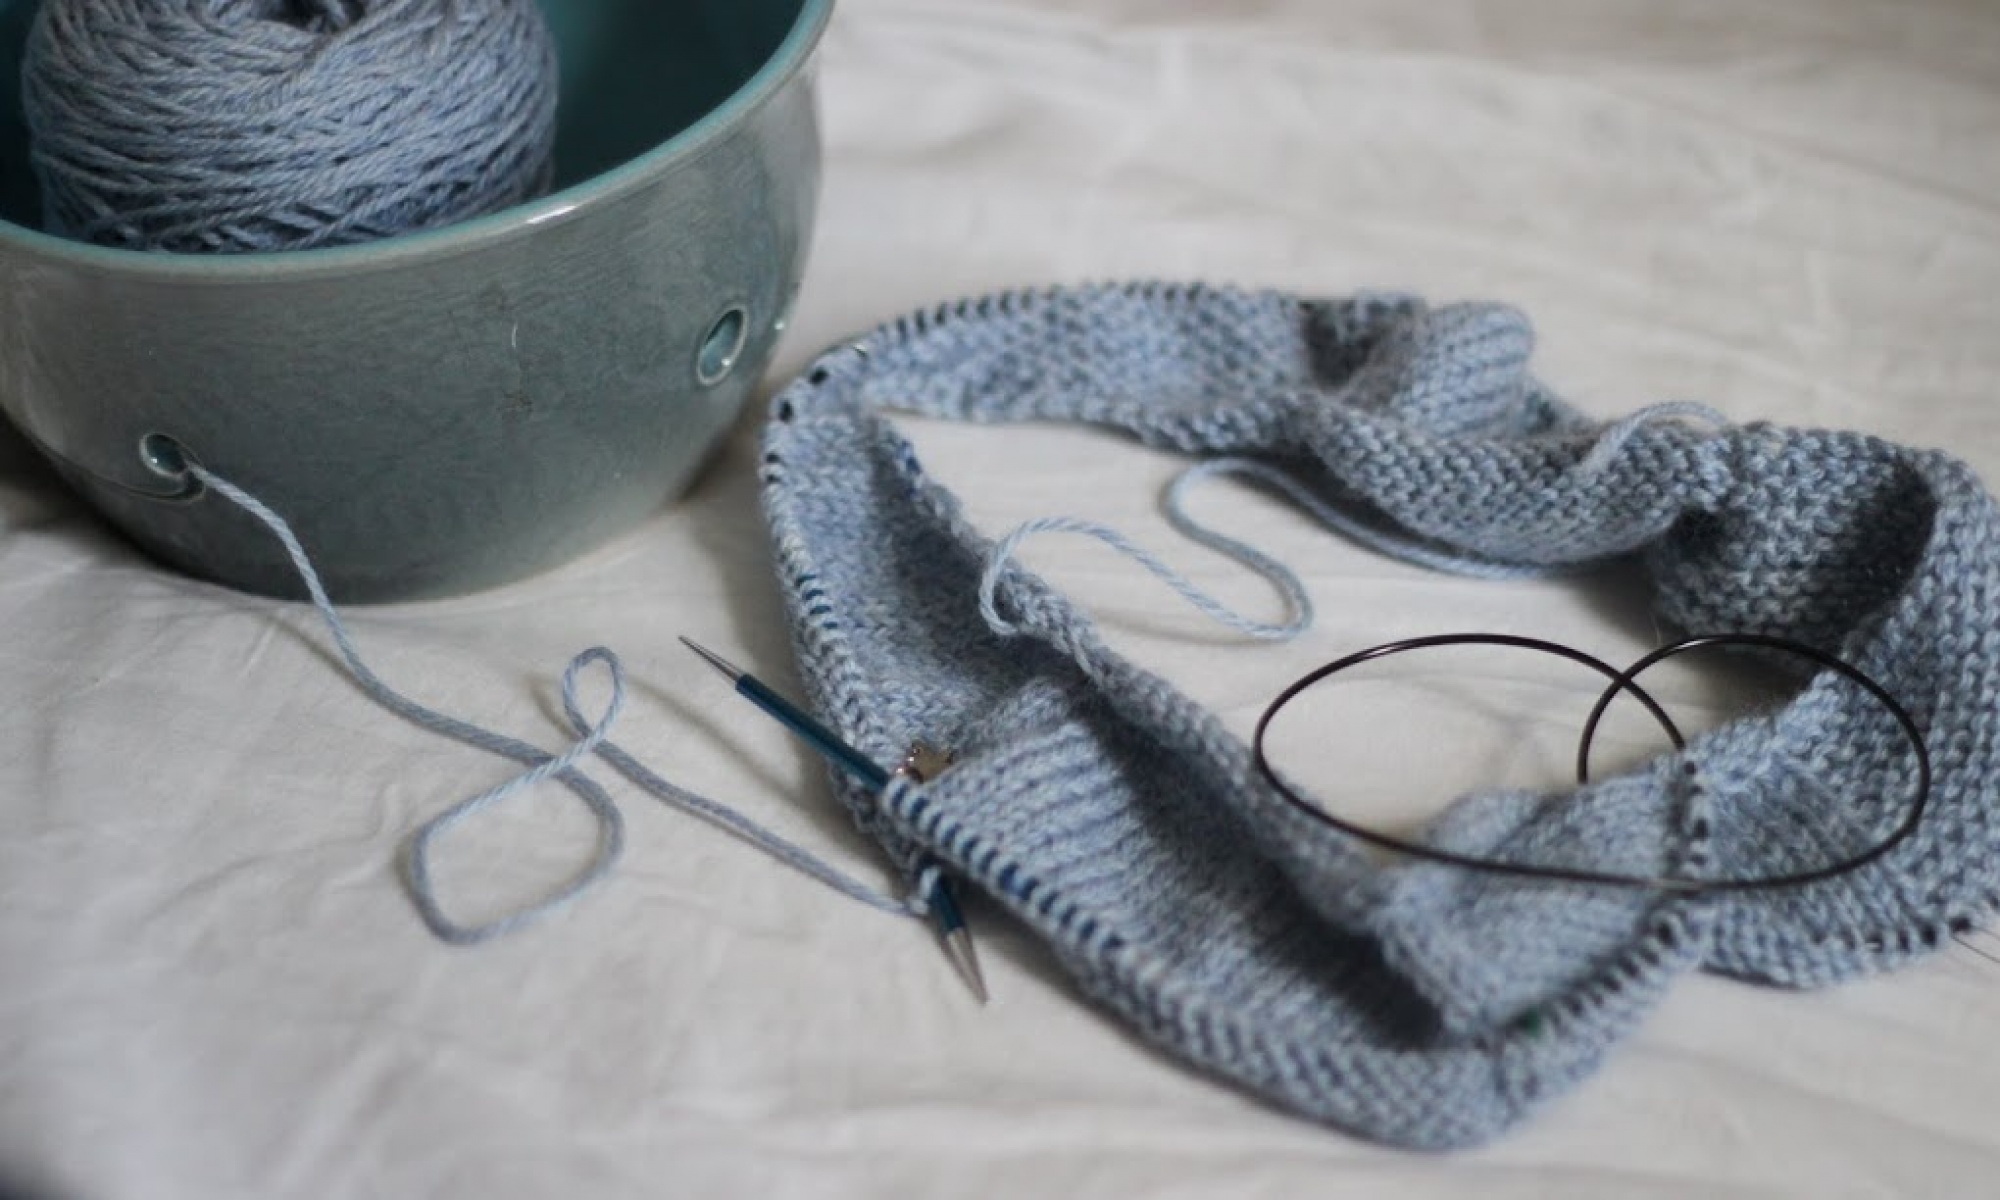 Knitting project and yarn bowl